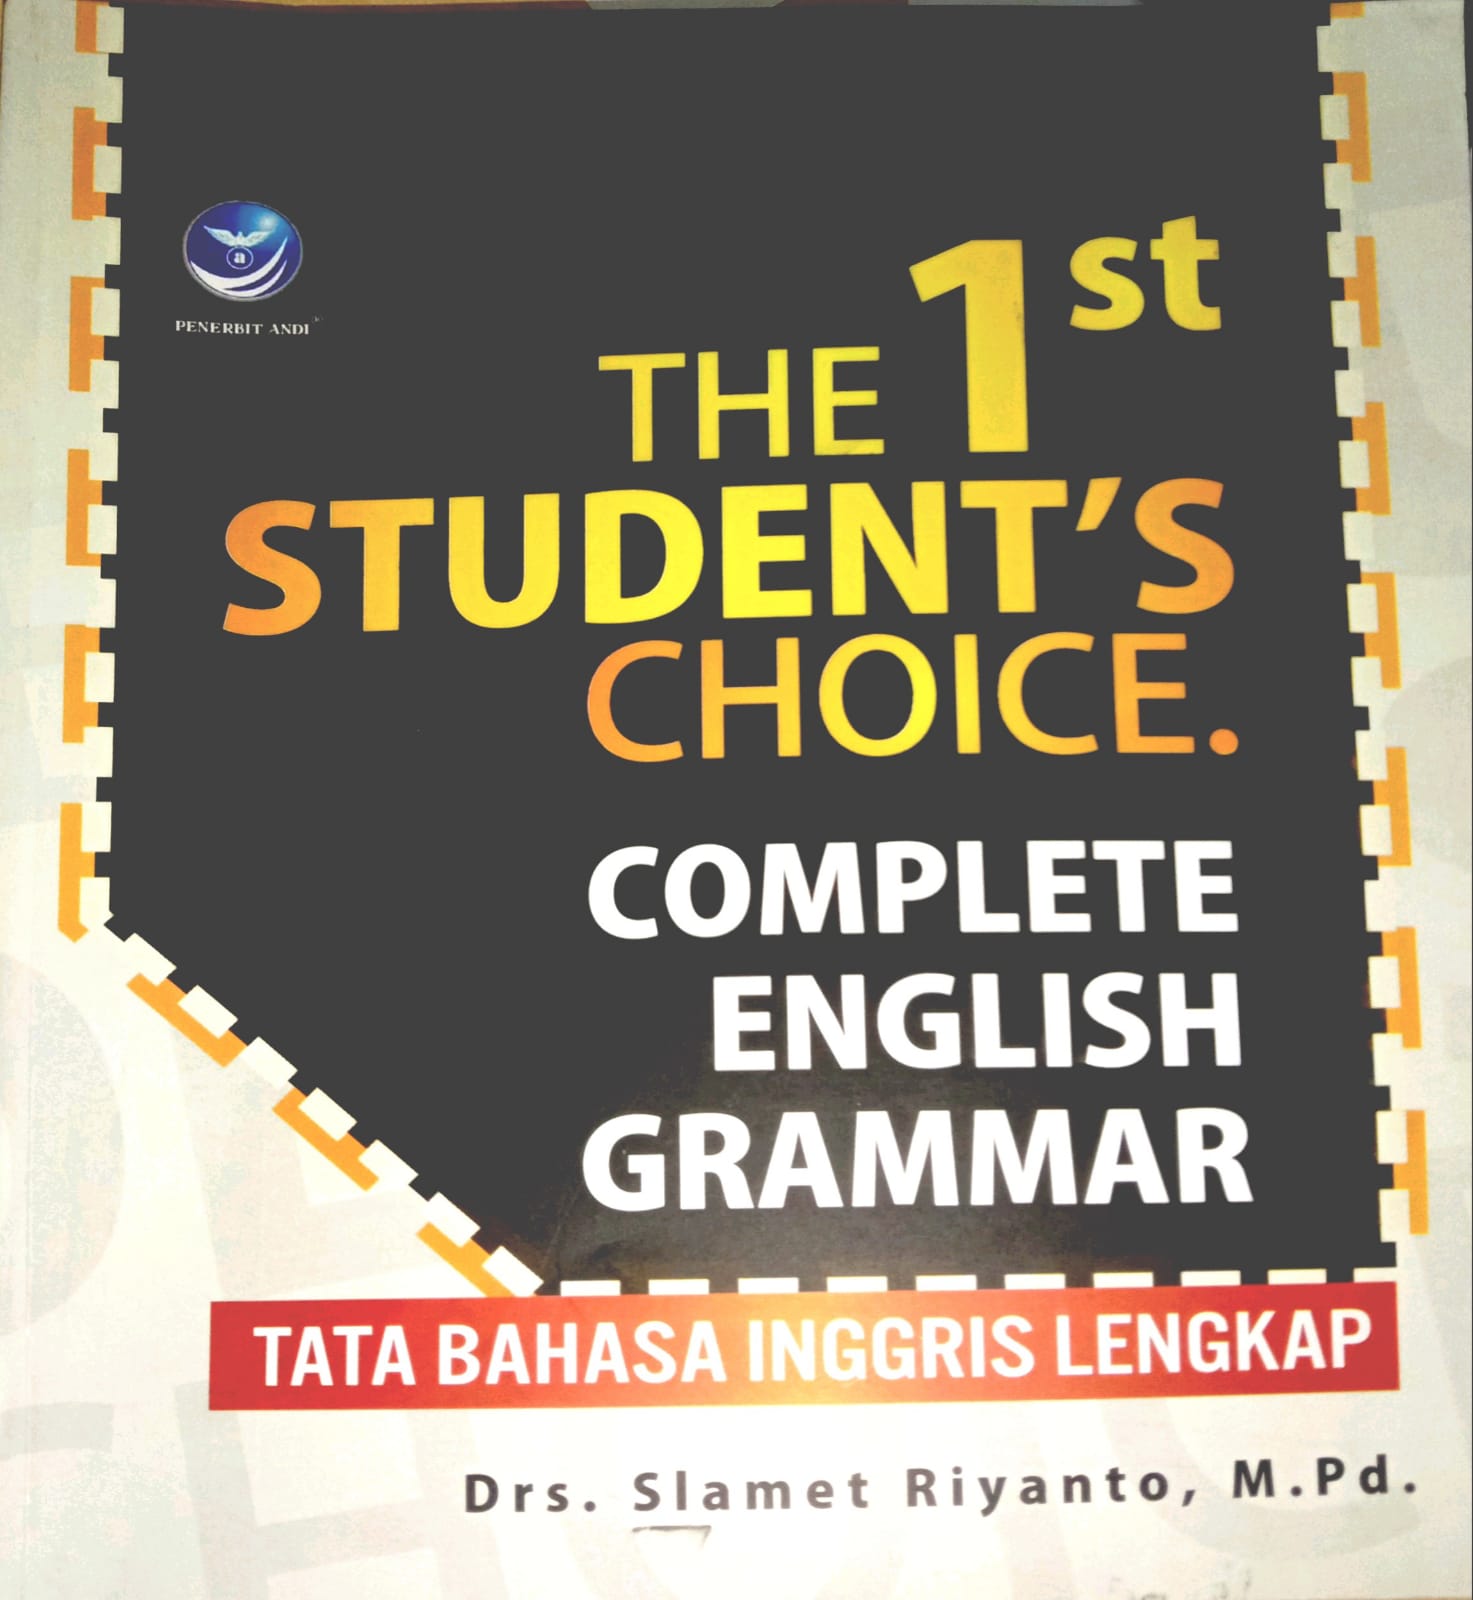 The 1 st Student's Choice Complete English Grammar Tata Bahasa Ingris Lengkap